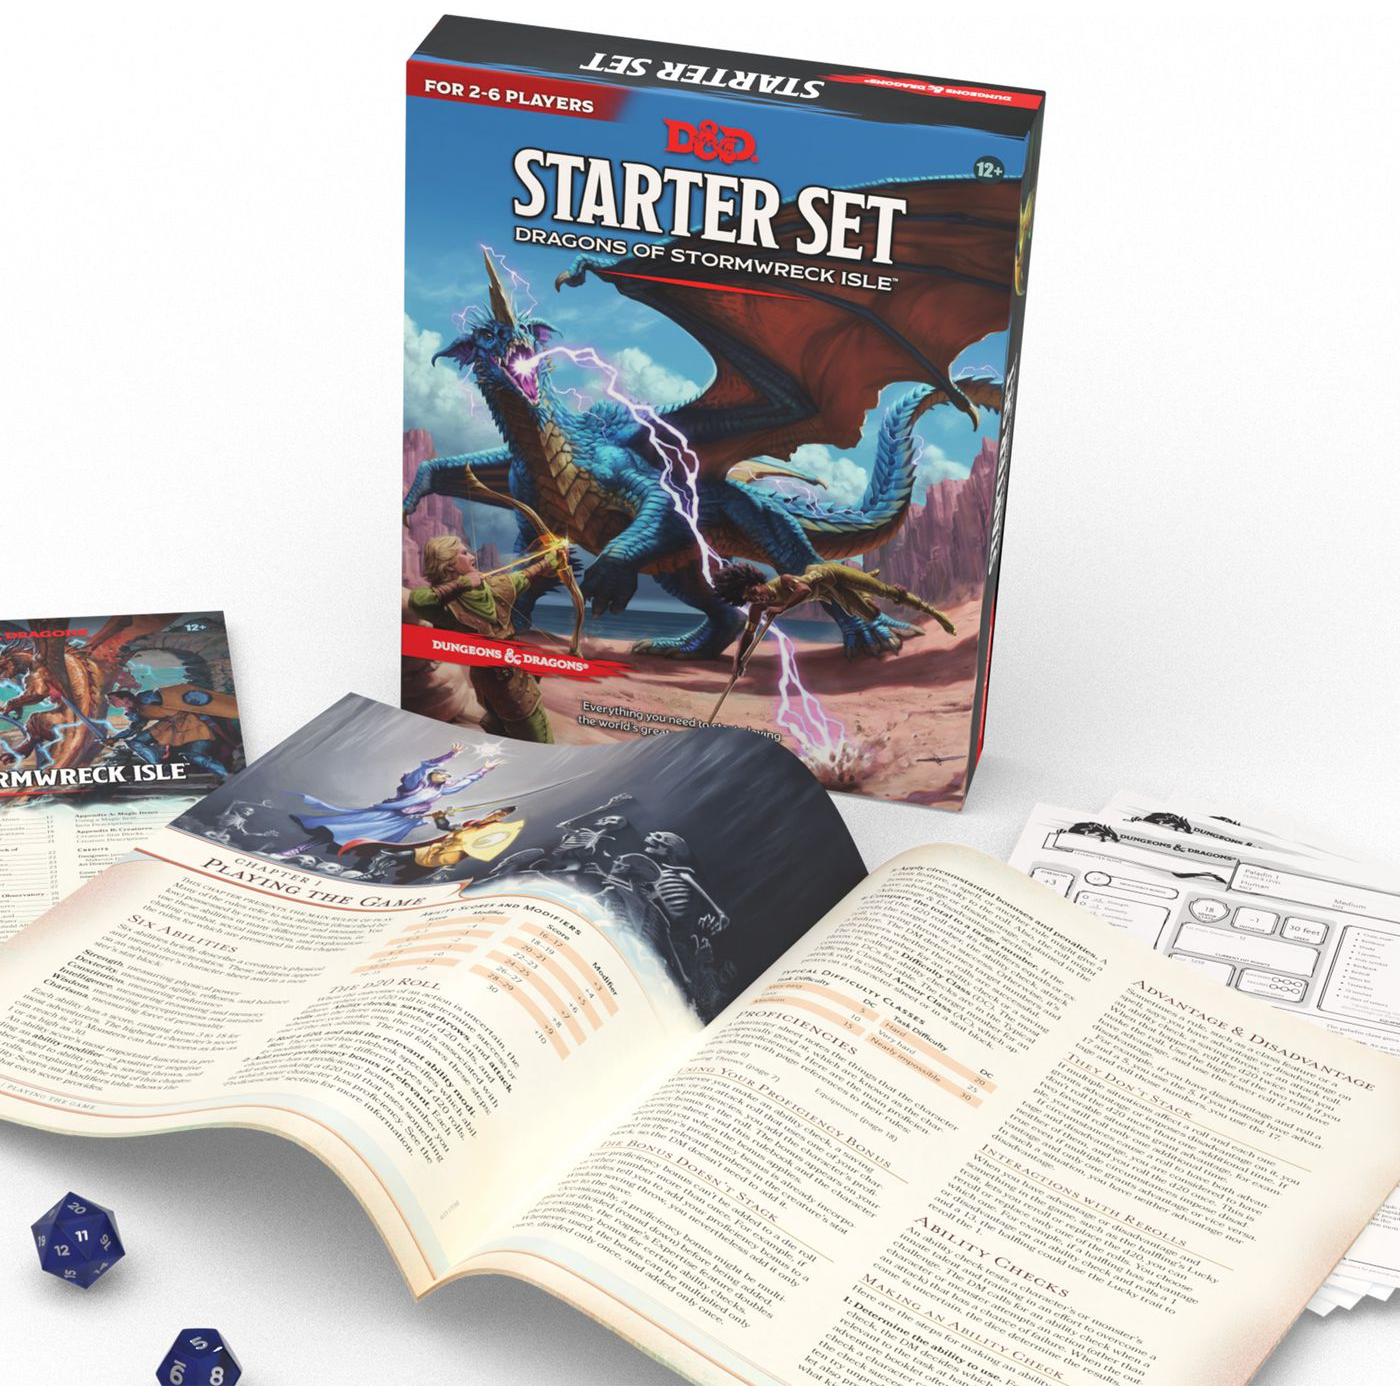 D&D Starter Set - Dragons of Stormwreck Isle - Box Set